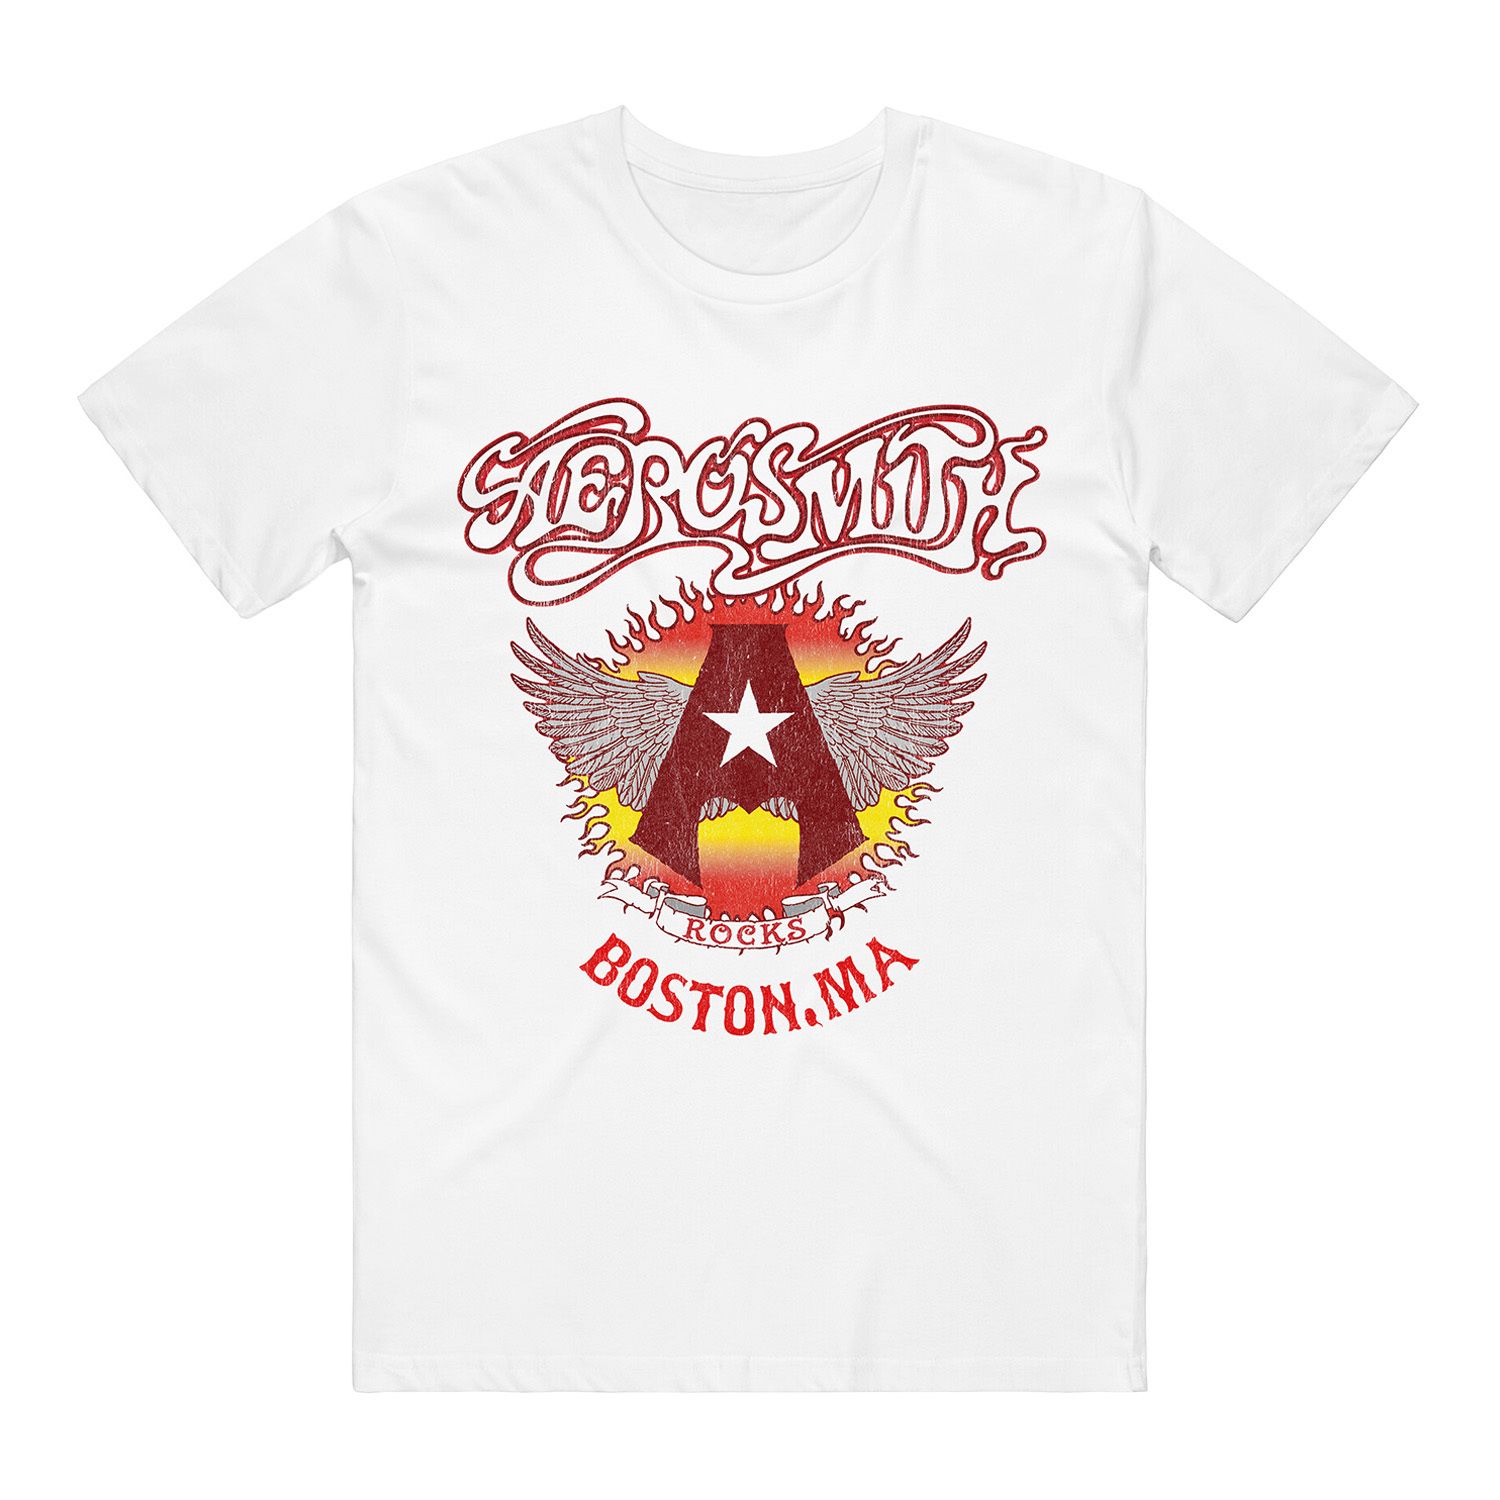 Мужская футболка с рисунком Aerosmith Licensed Character мужская футболка с рисунком aerosmith licensed character